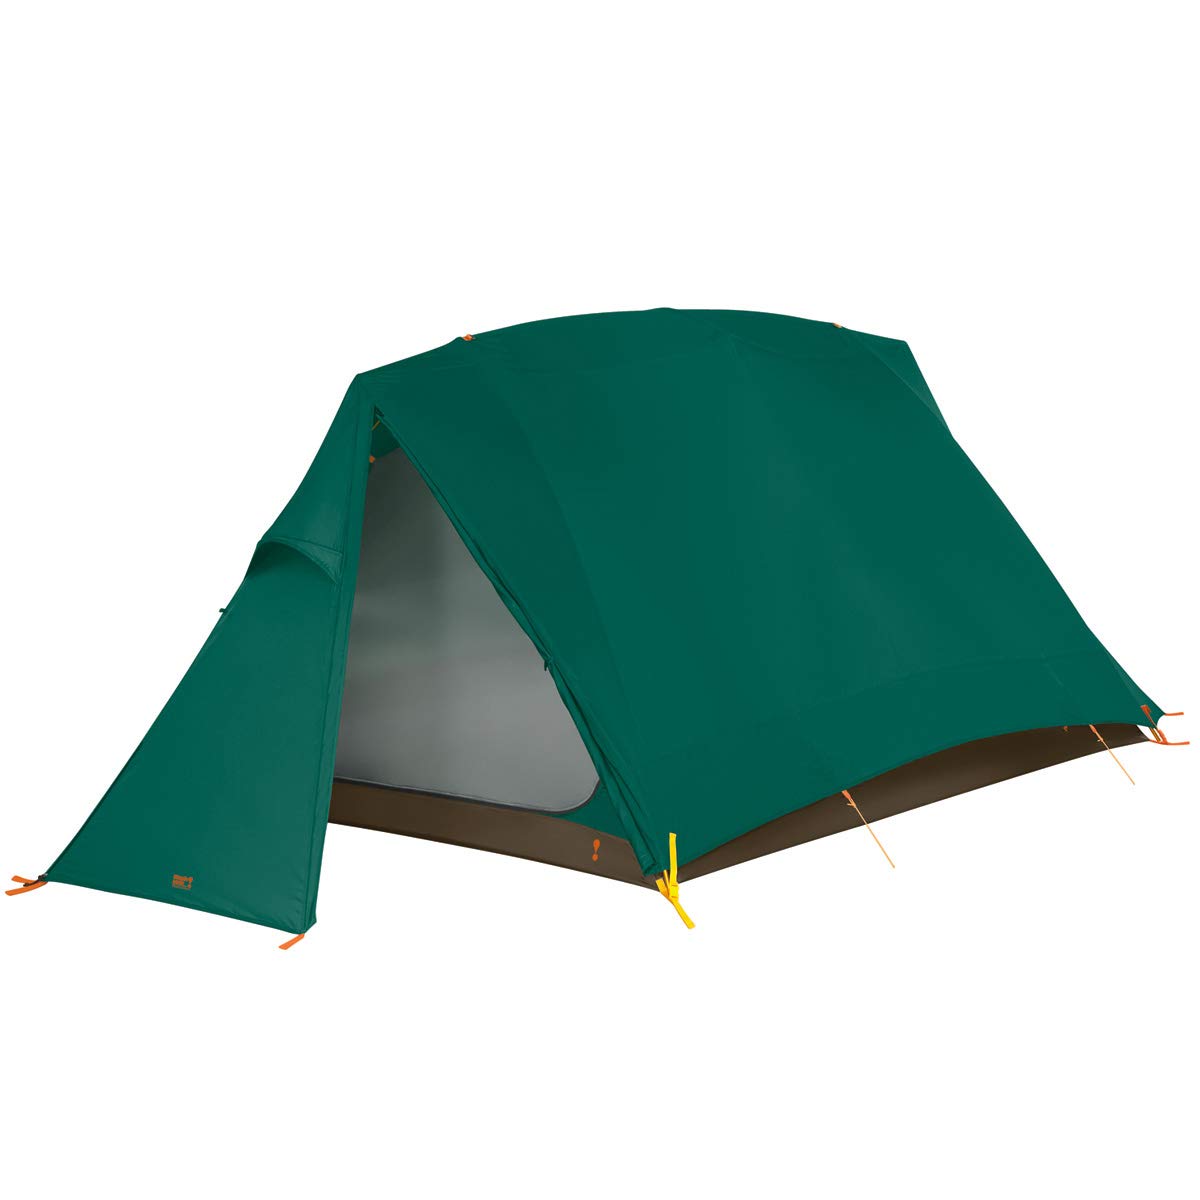 Eureka! Timberline SQ Three-Season Backpacking Tent